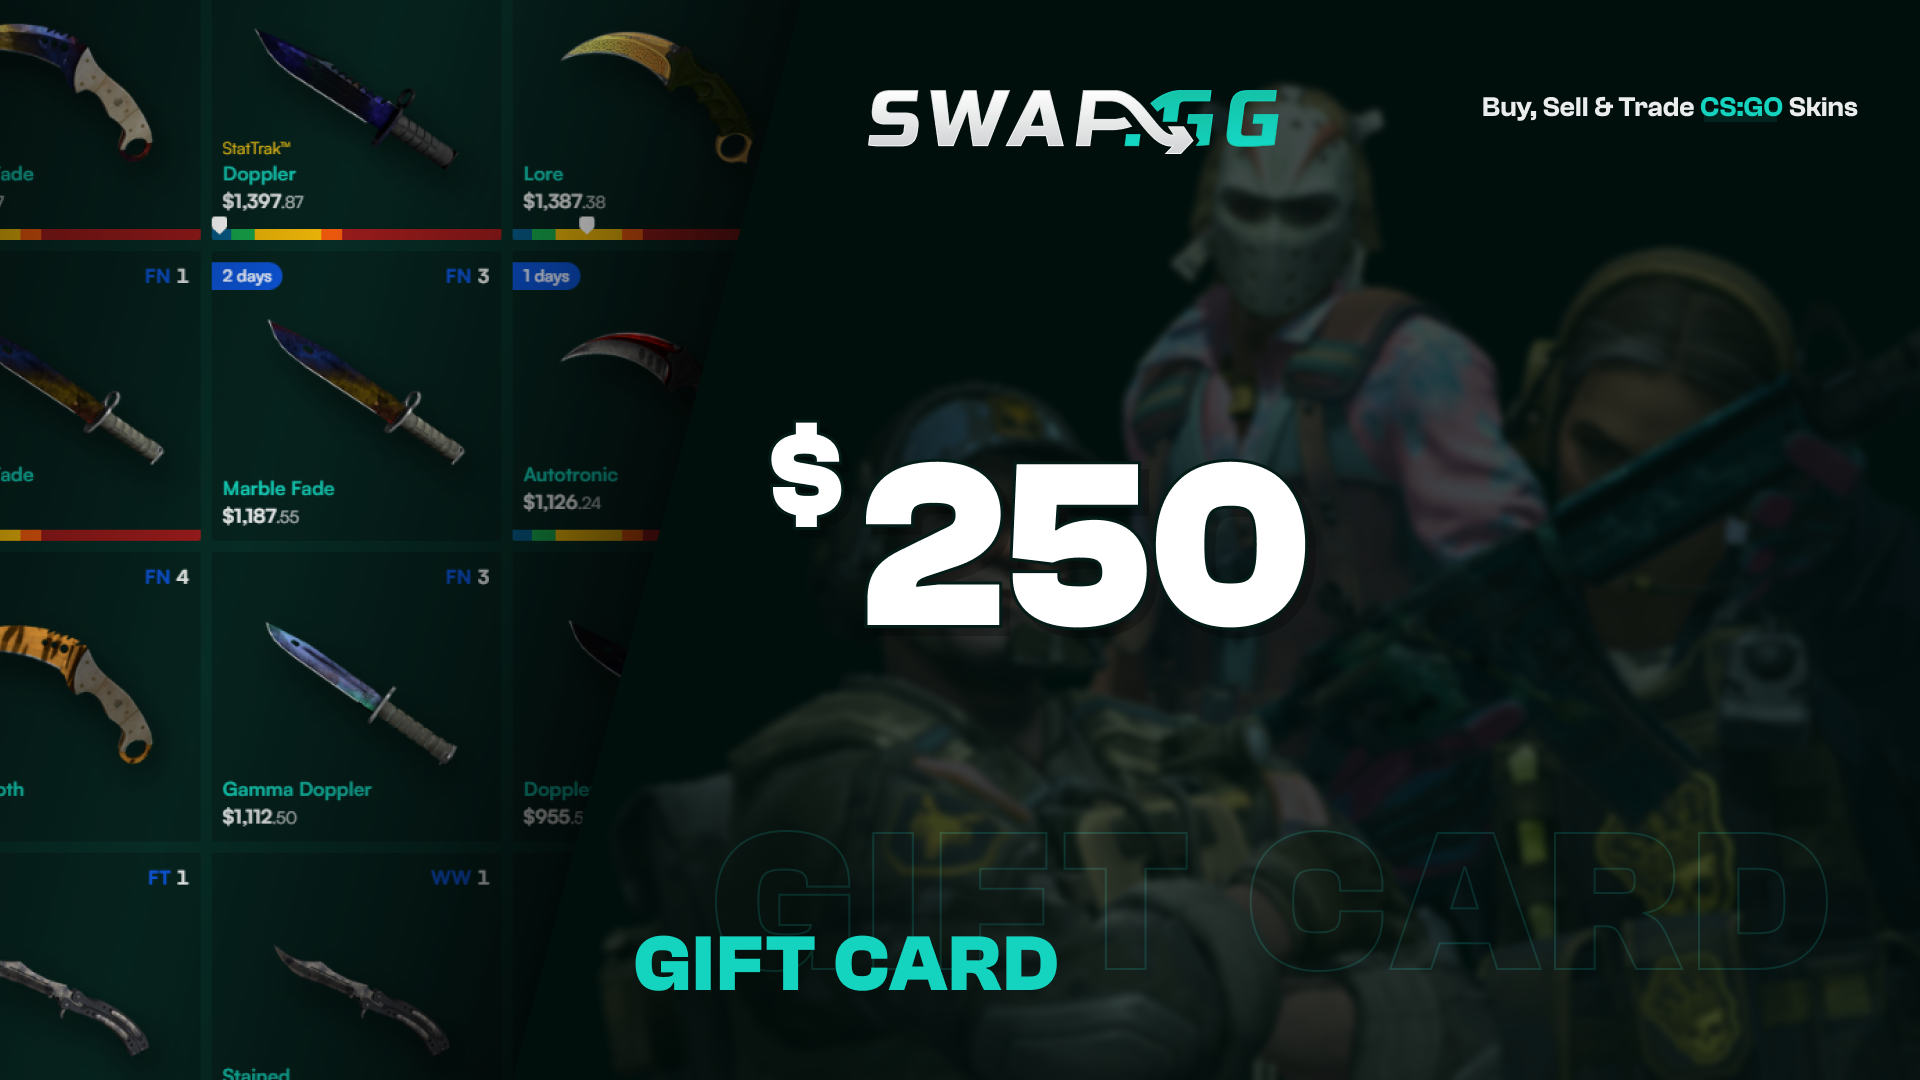 Swap.gg $250 Gift Card